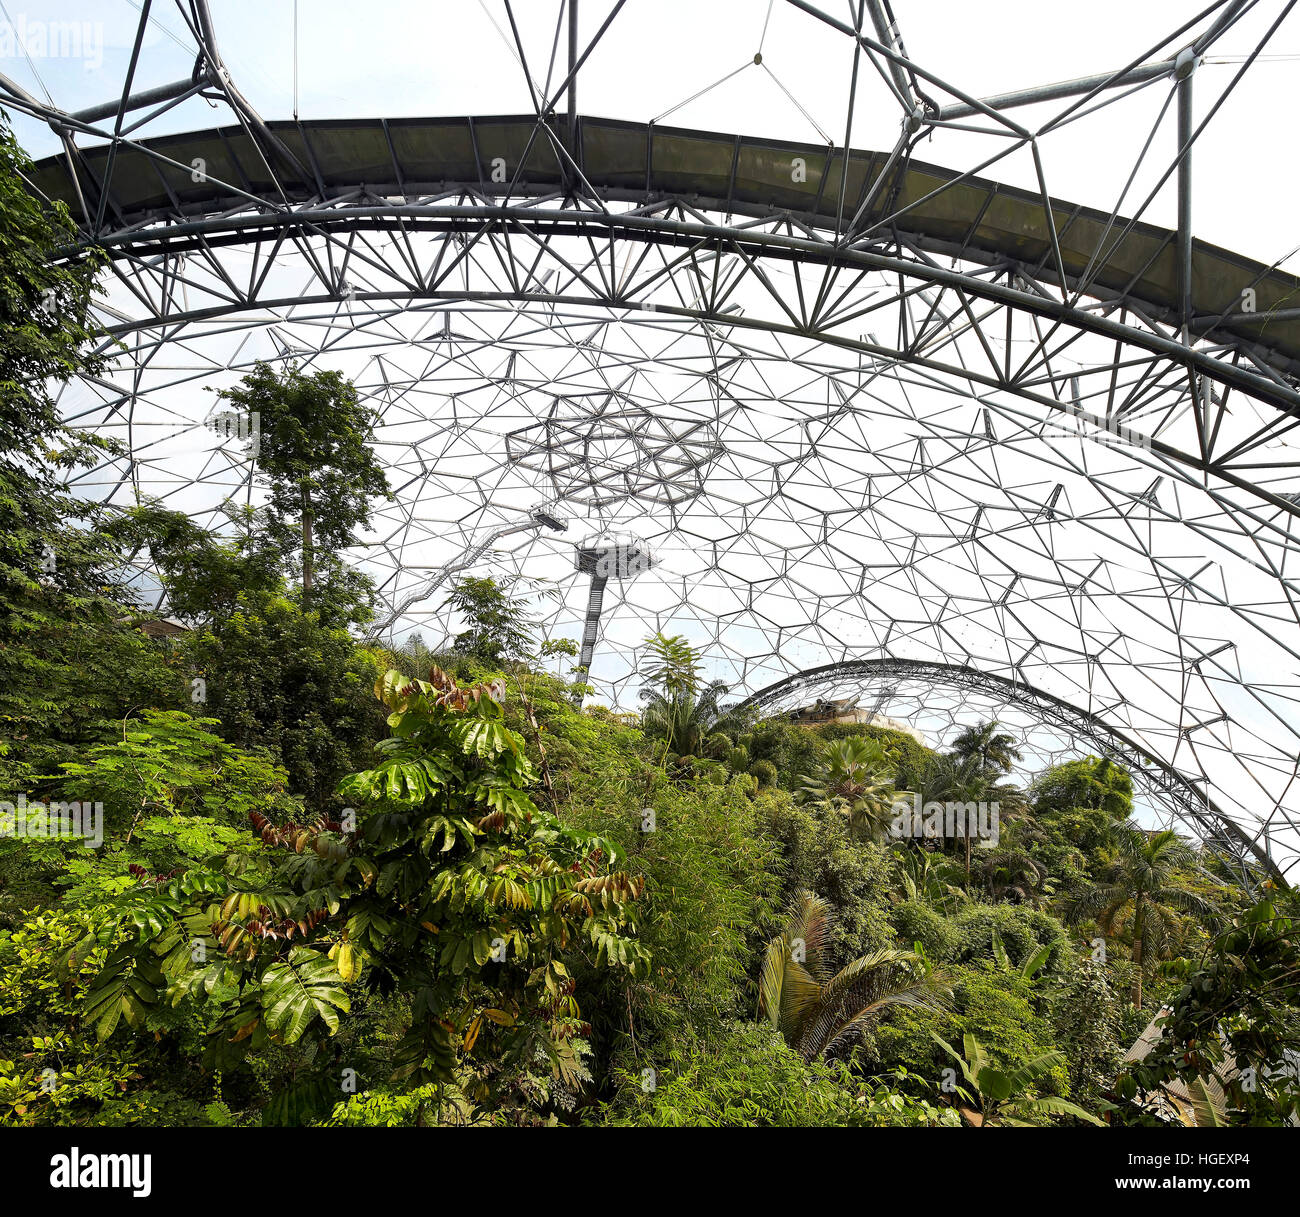 Interior of dome with rainforest plants. Eden Project, Bodelva, United Kingdom. Architect: Grimshaw, 2016. Stock Photo